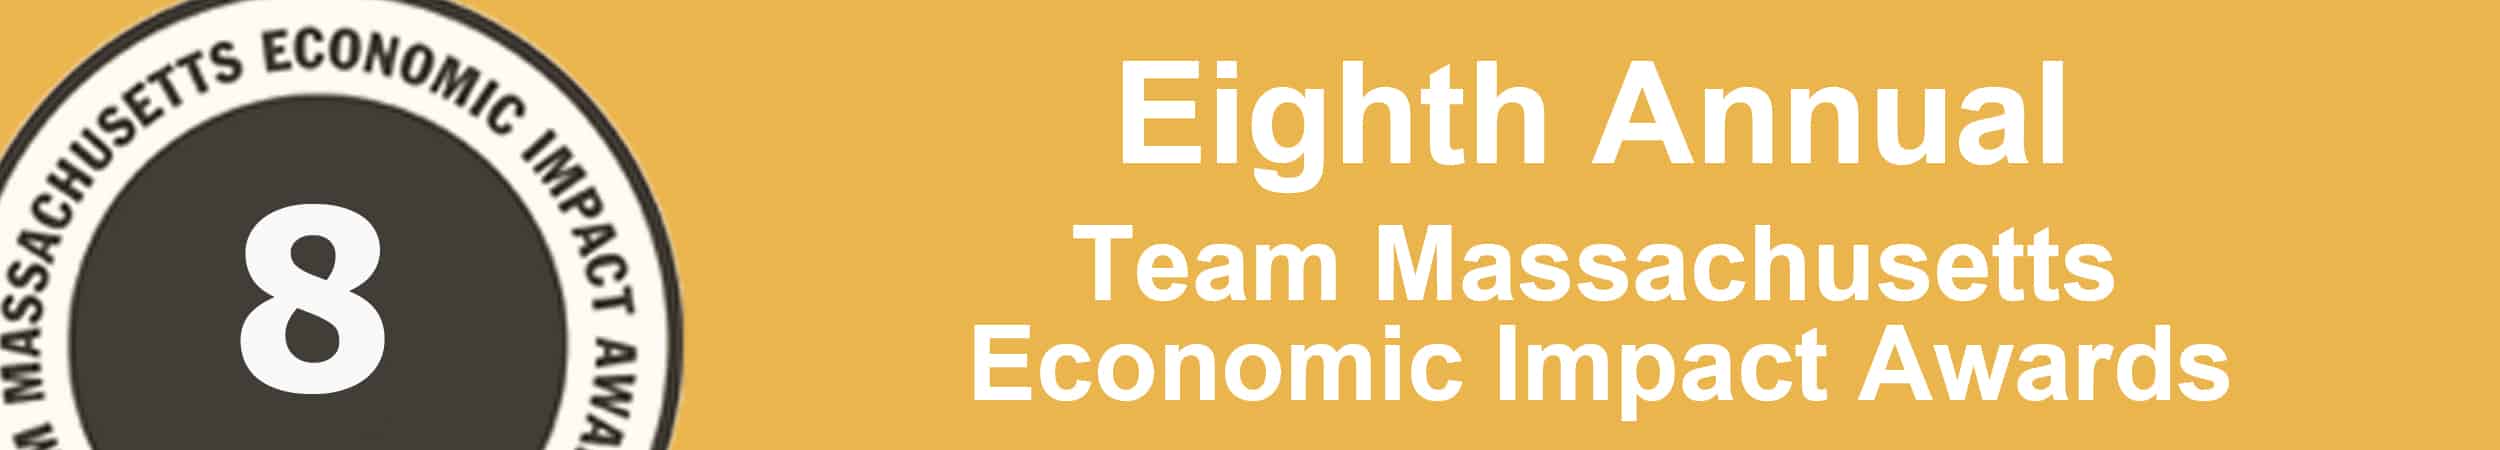 8th Annual Team Massachusetts Economic Impact Awards